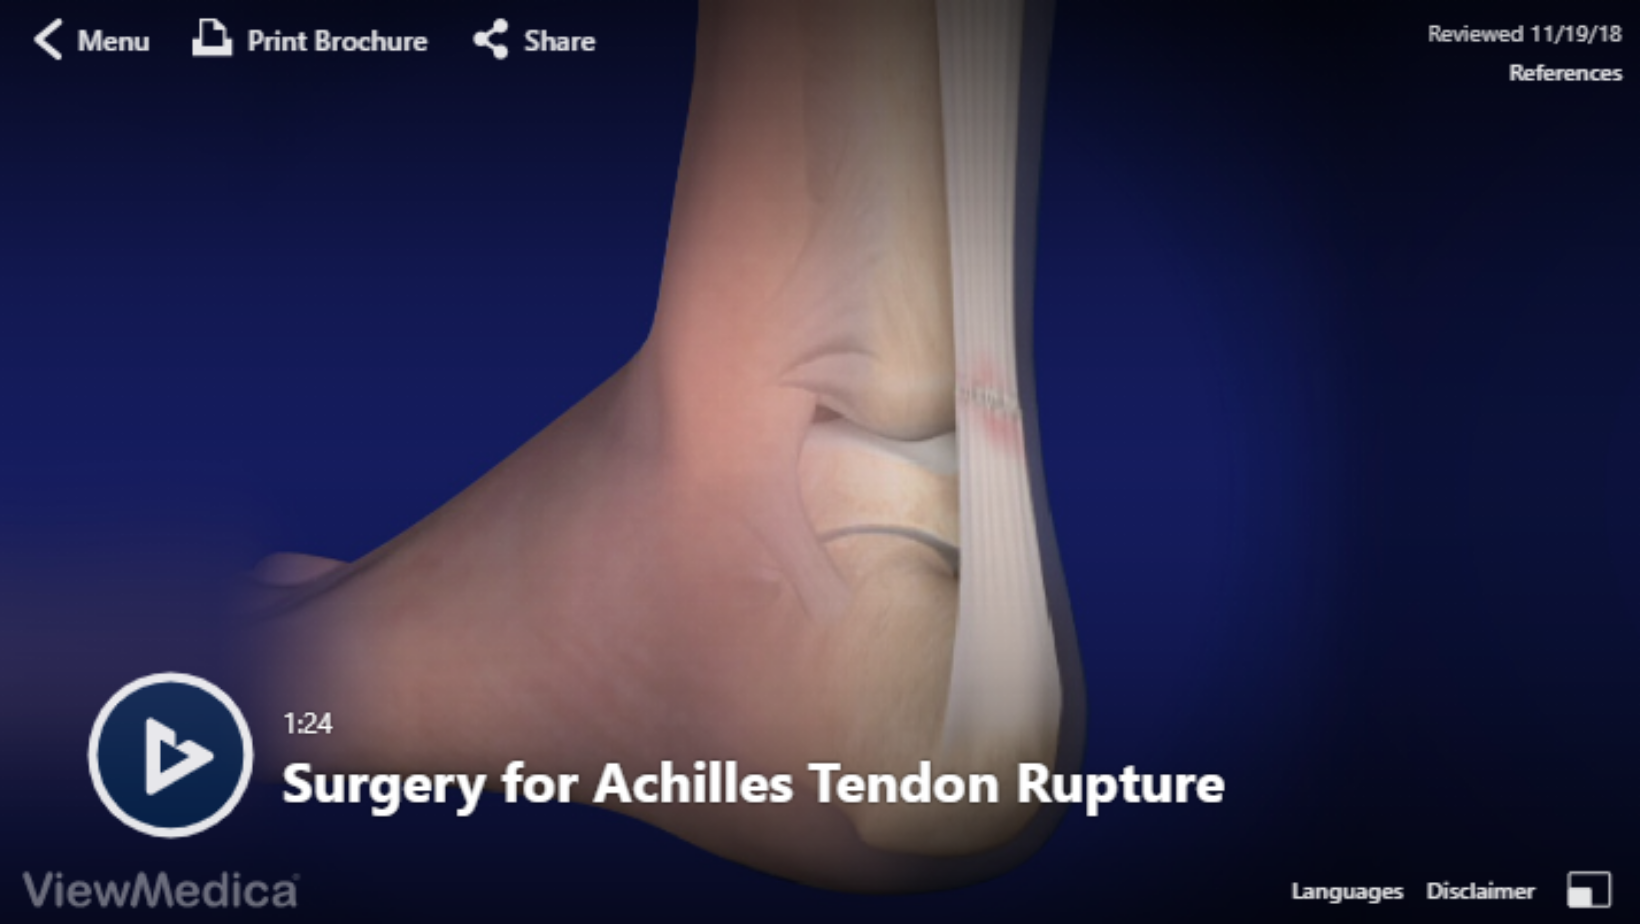 Video: Surgery for Achilles Tendon Rupture